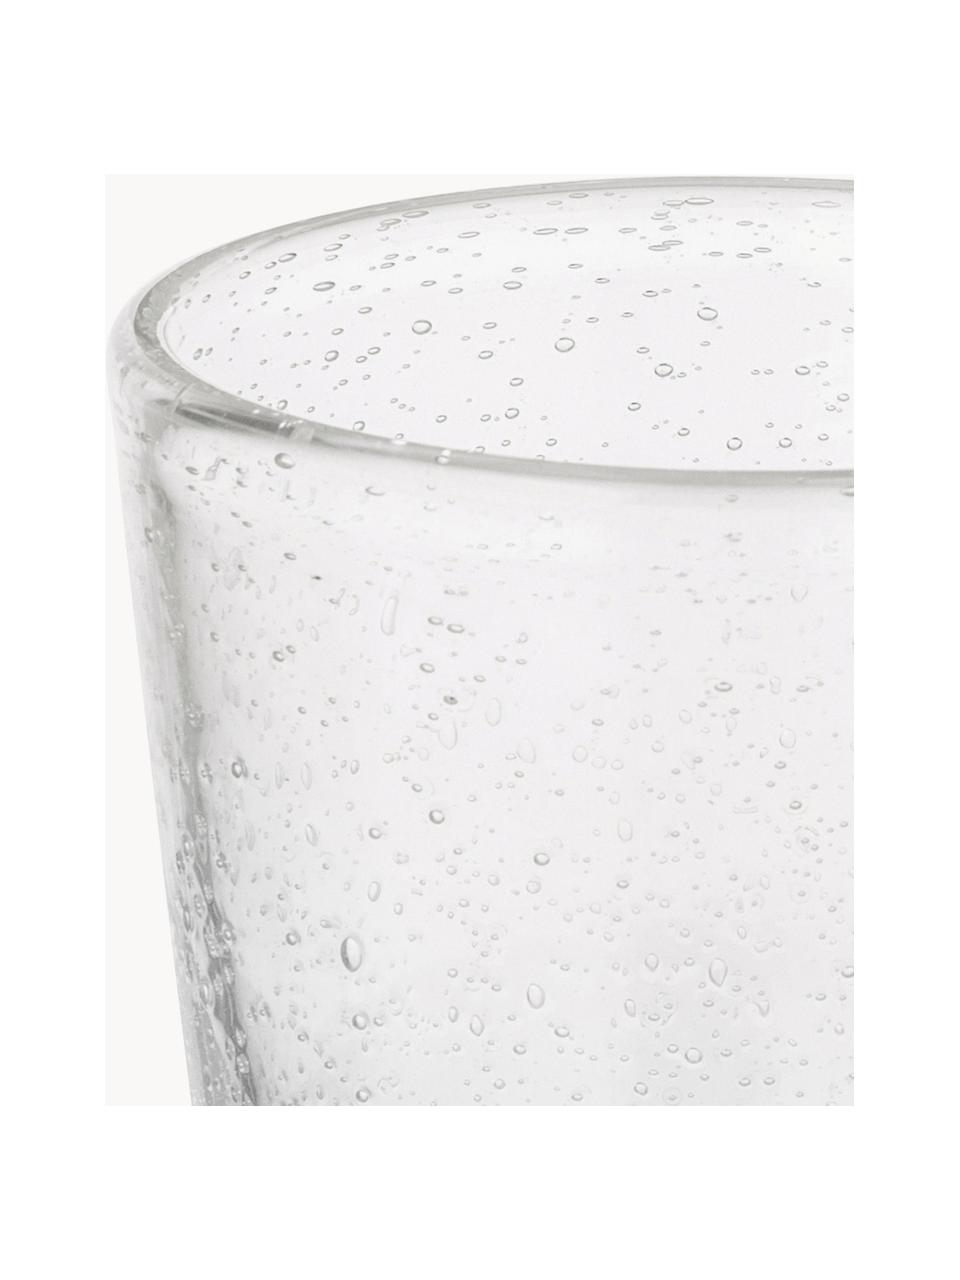 Mondgeblazen Bubble waterglazen met decoratieve luchtbellen, 4 stuks, Mondgeblazen glas, Transparant, Ø 8 x H 10 cm, 250 ml